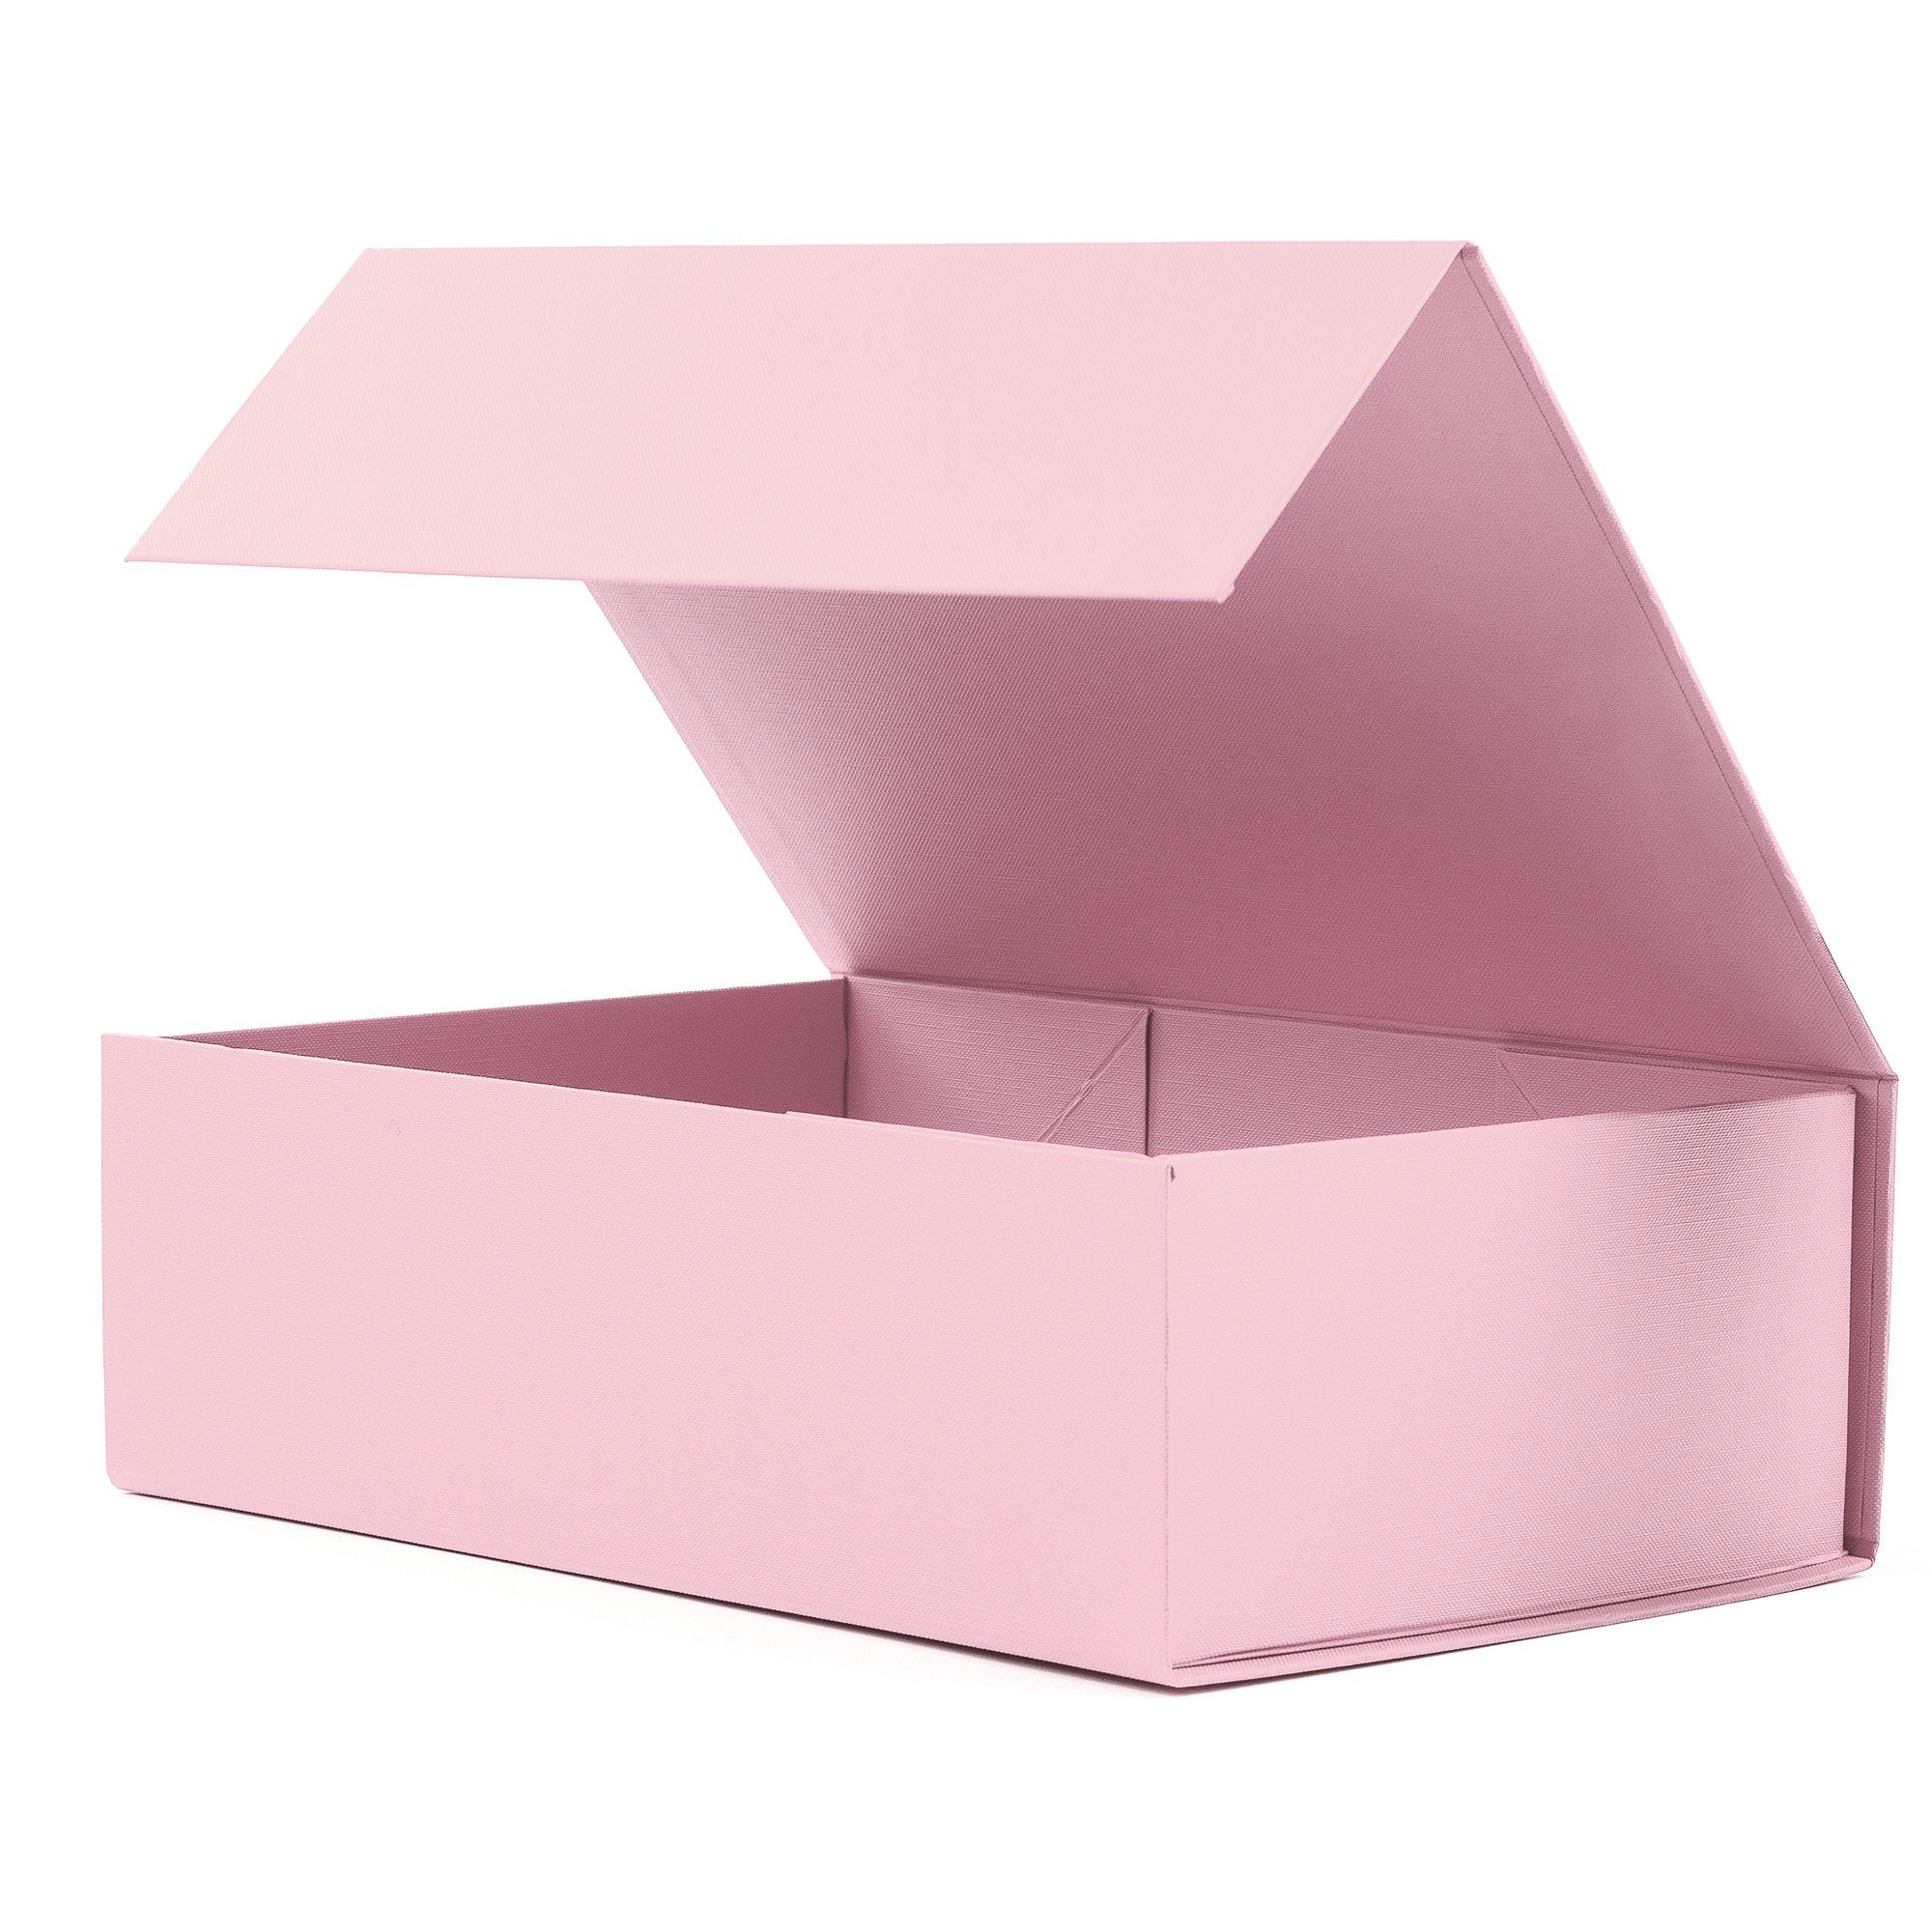 AdelDream Aufbewahrungsbox Gift Box, Magnetic Gift Box, Reusable Decorative Box Rosa